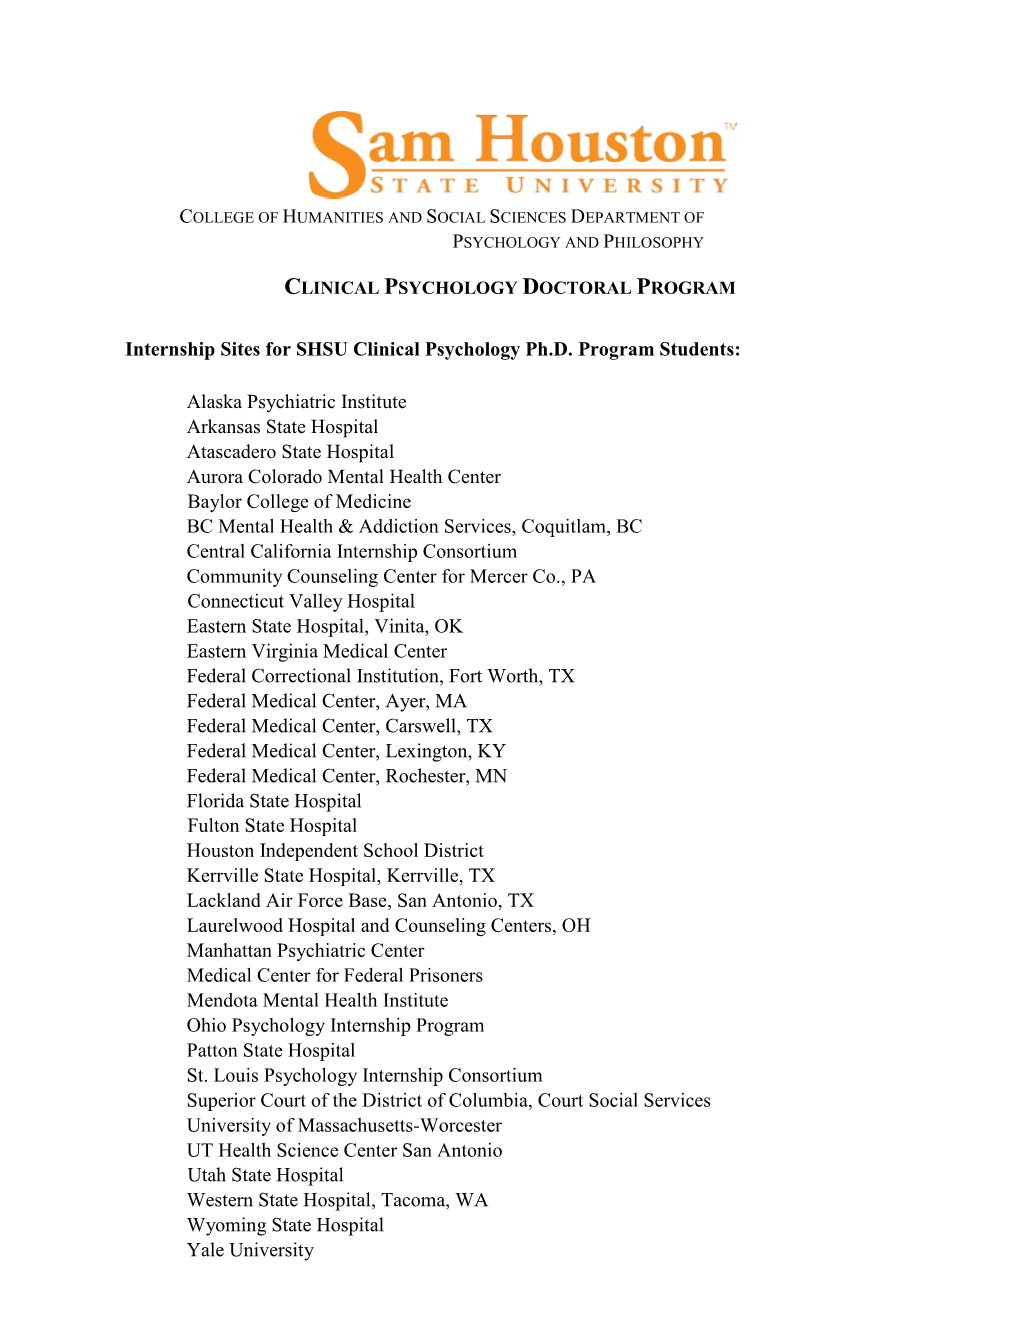 Internship Sites for SHSU Clinical Psychology Ph.D. Program Students